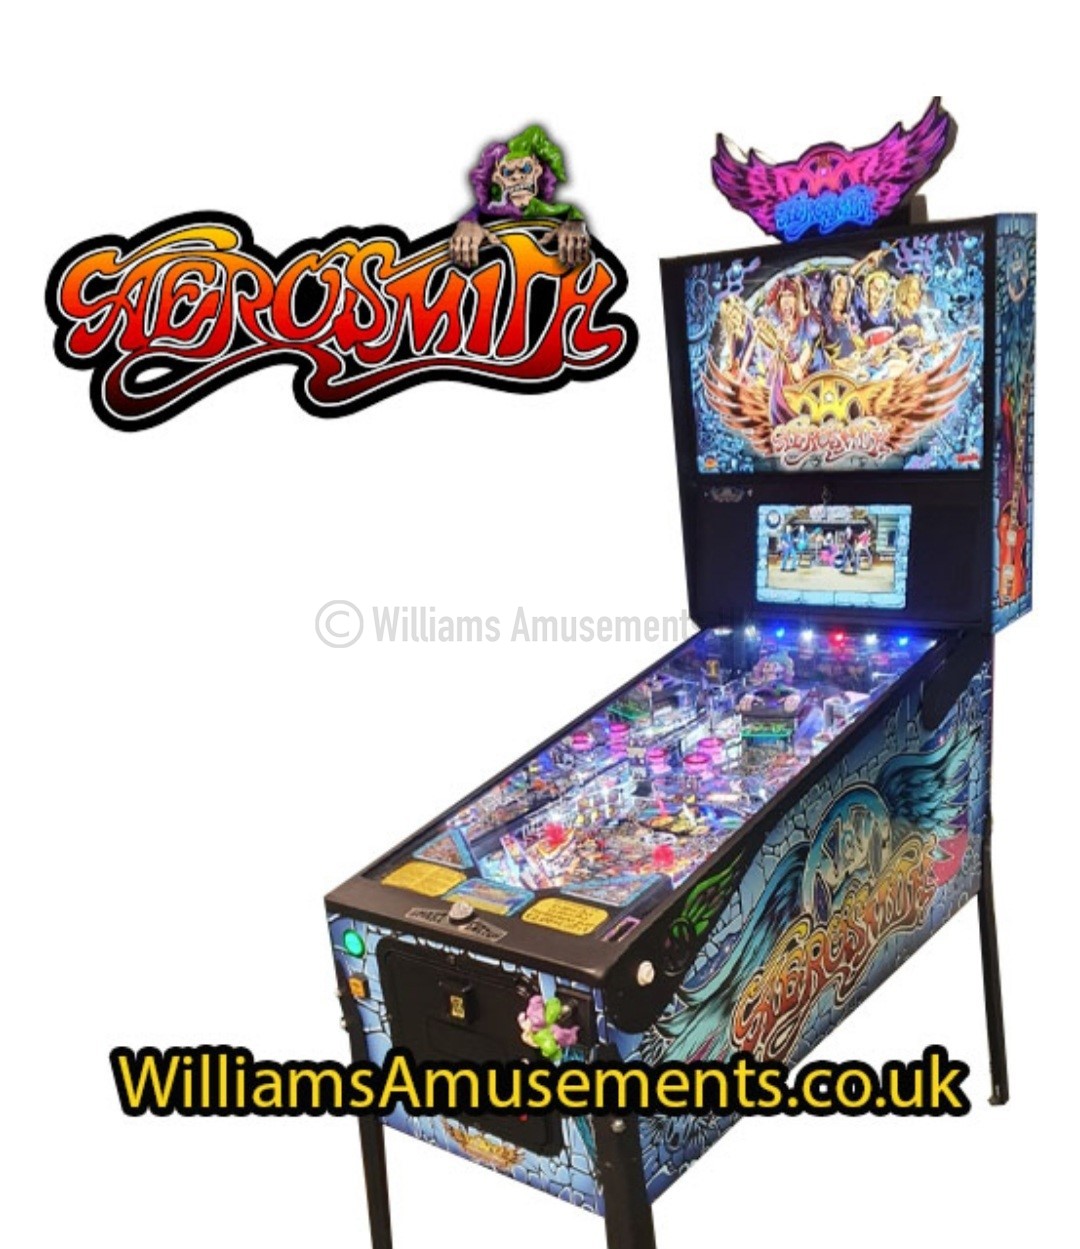 Williams Amusements